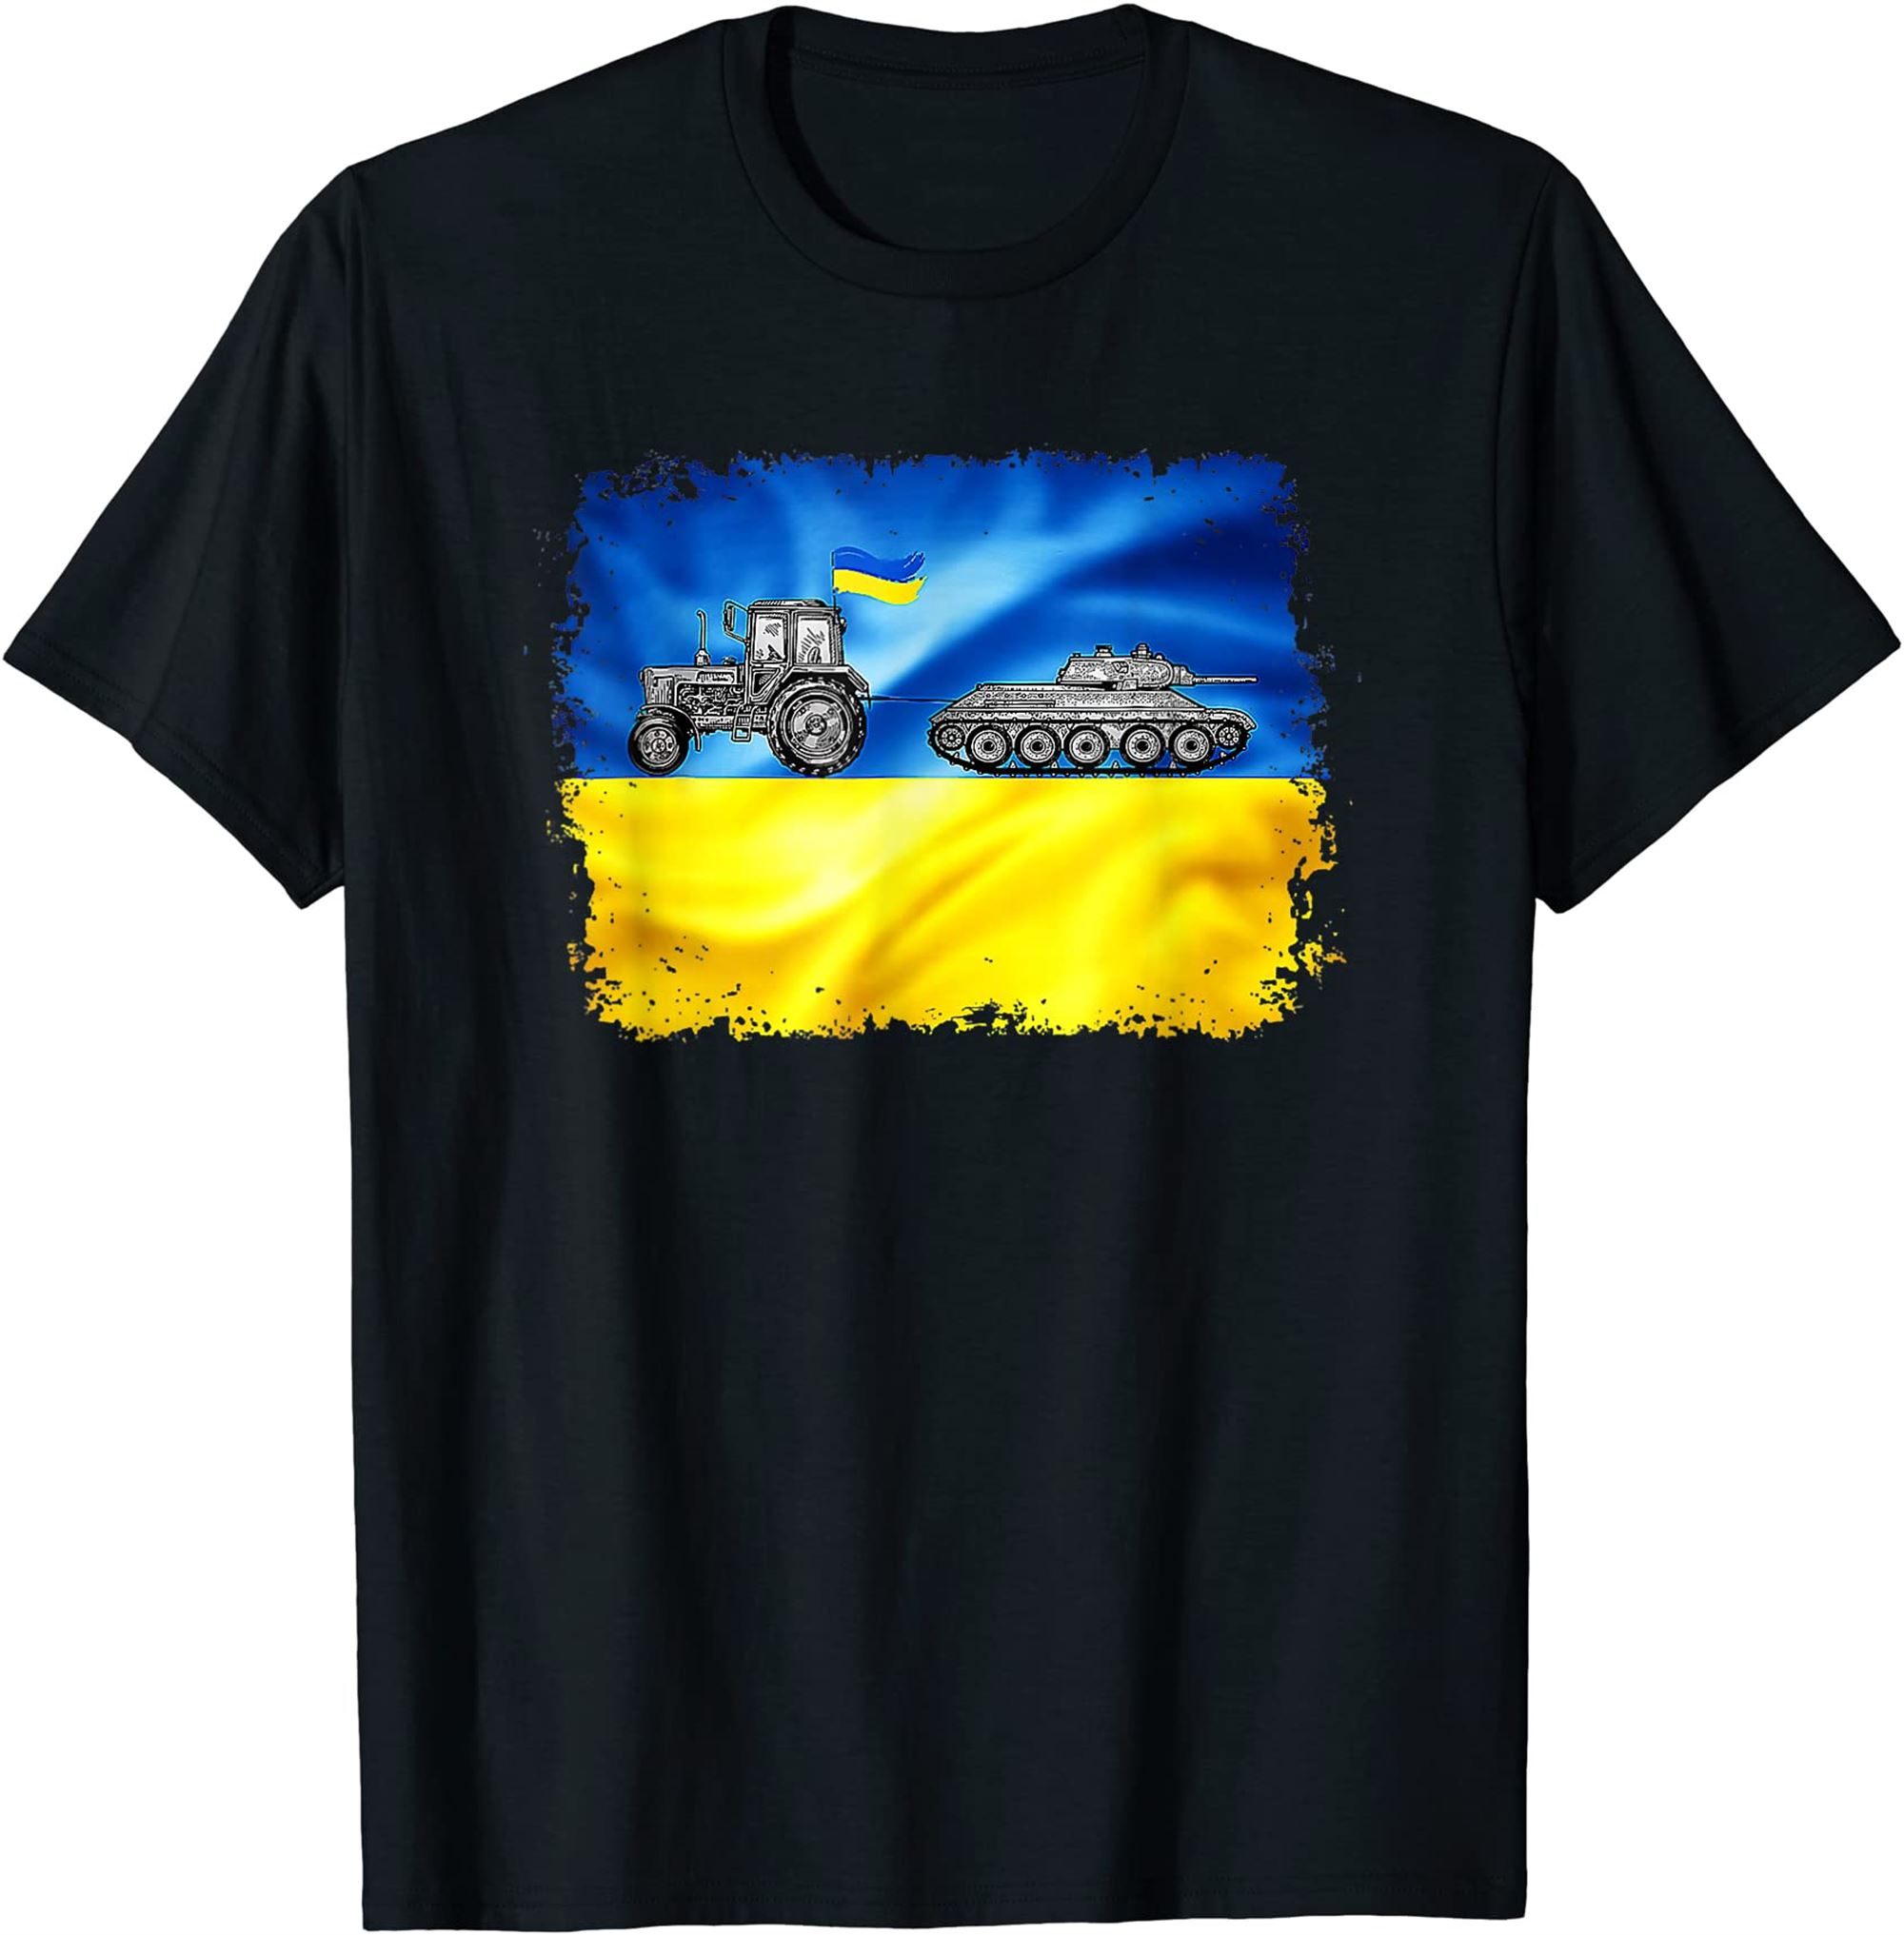 Ukrainian Tractor Pulling Tank With Ukrainian Ukraine Flag T-shirt Size Up To 5xl